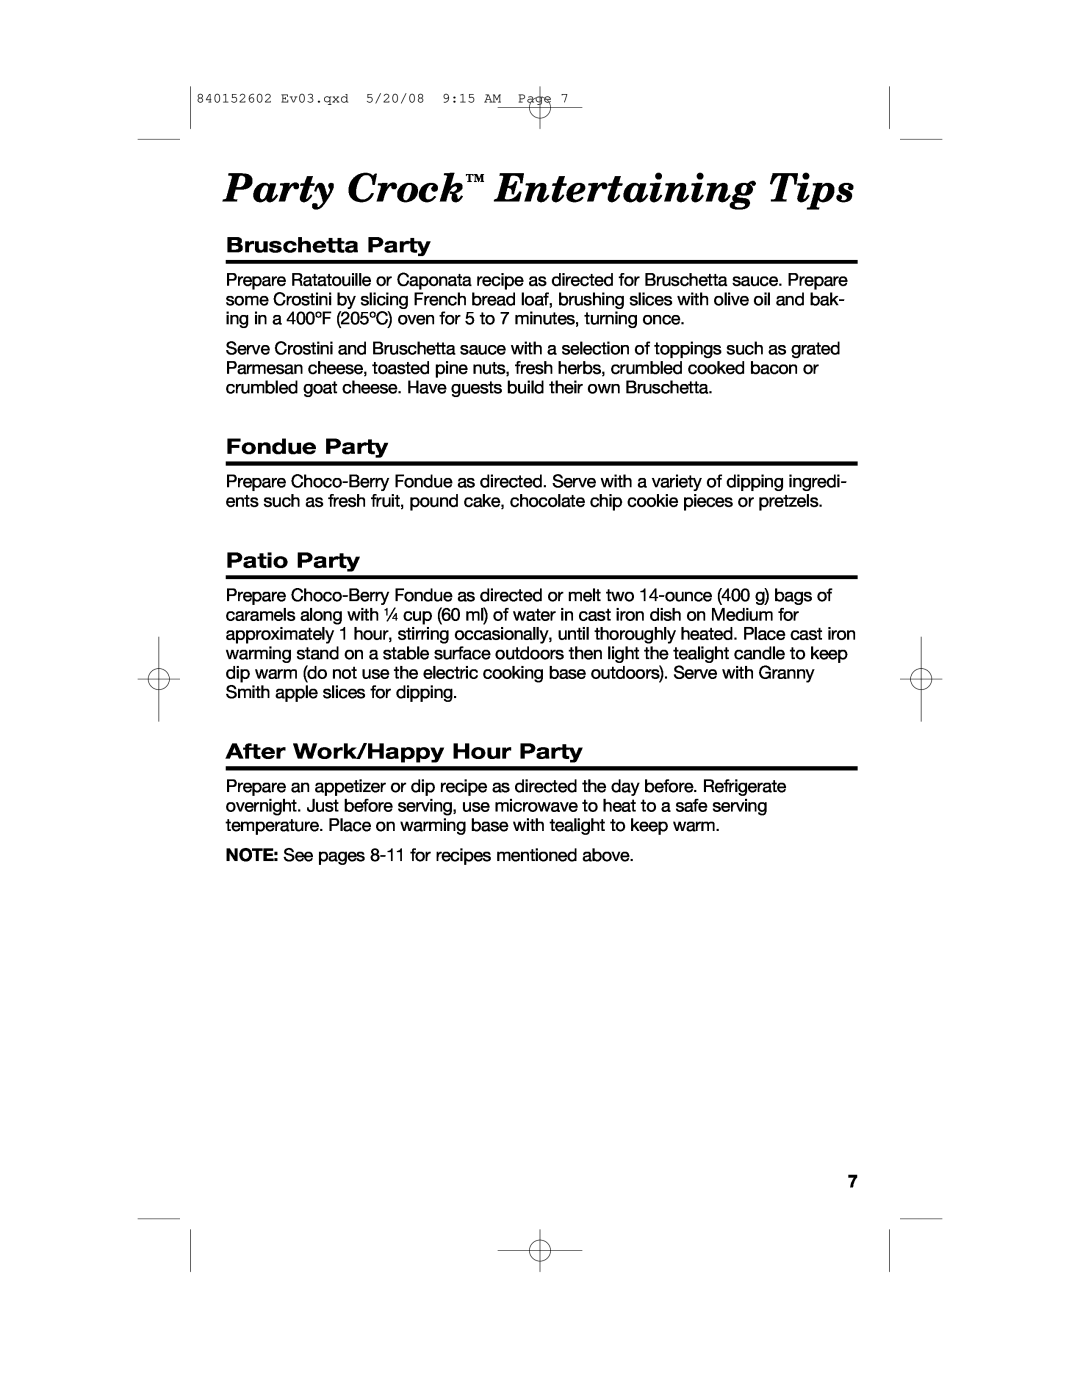 Hamilton Beach 840152602 manual Party Crock Entertaining Tips, Bruschetta Party, Fondue Party, Patio Party 